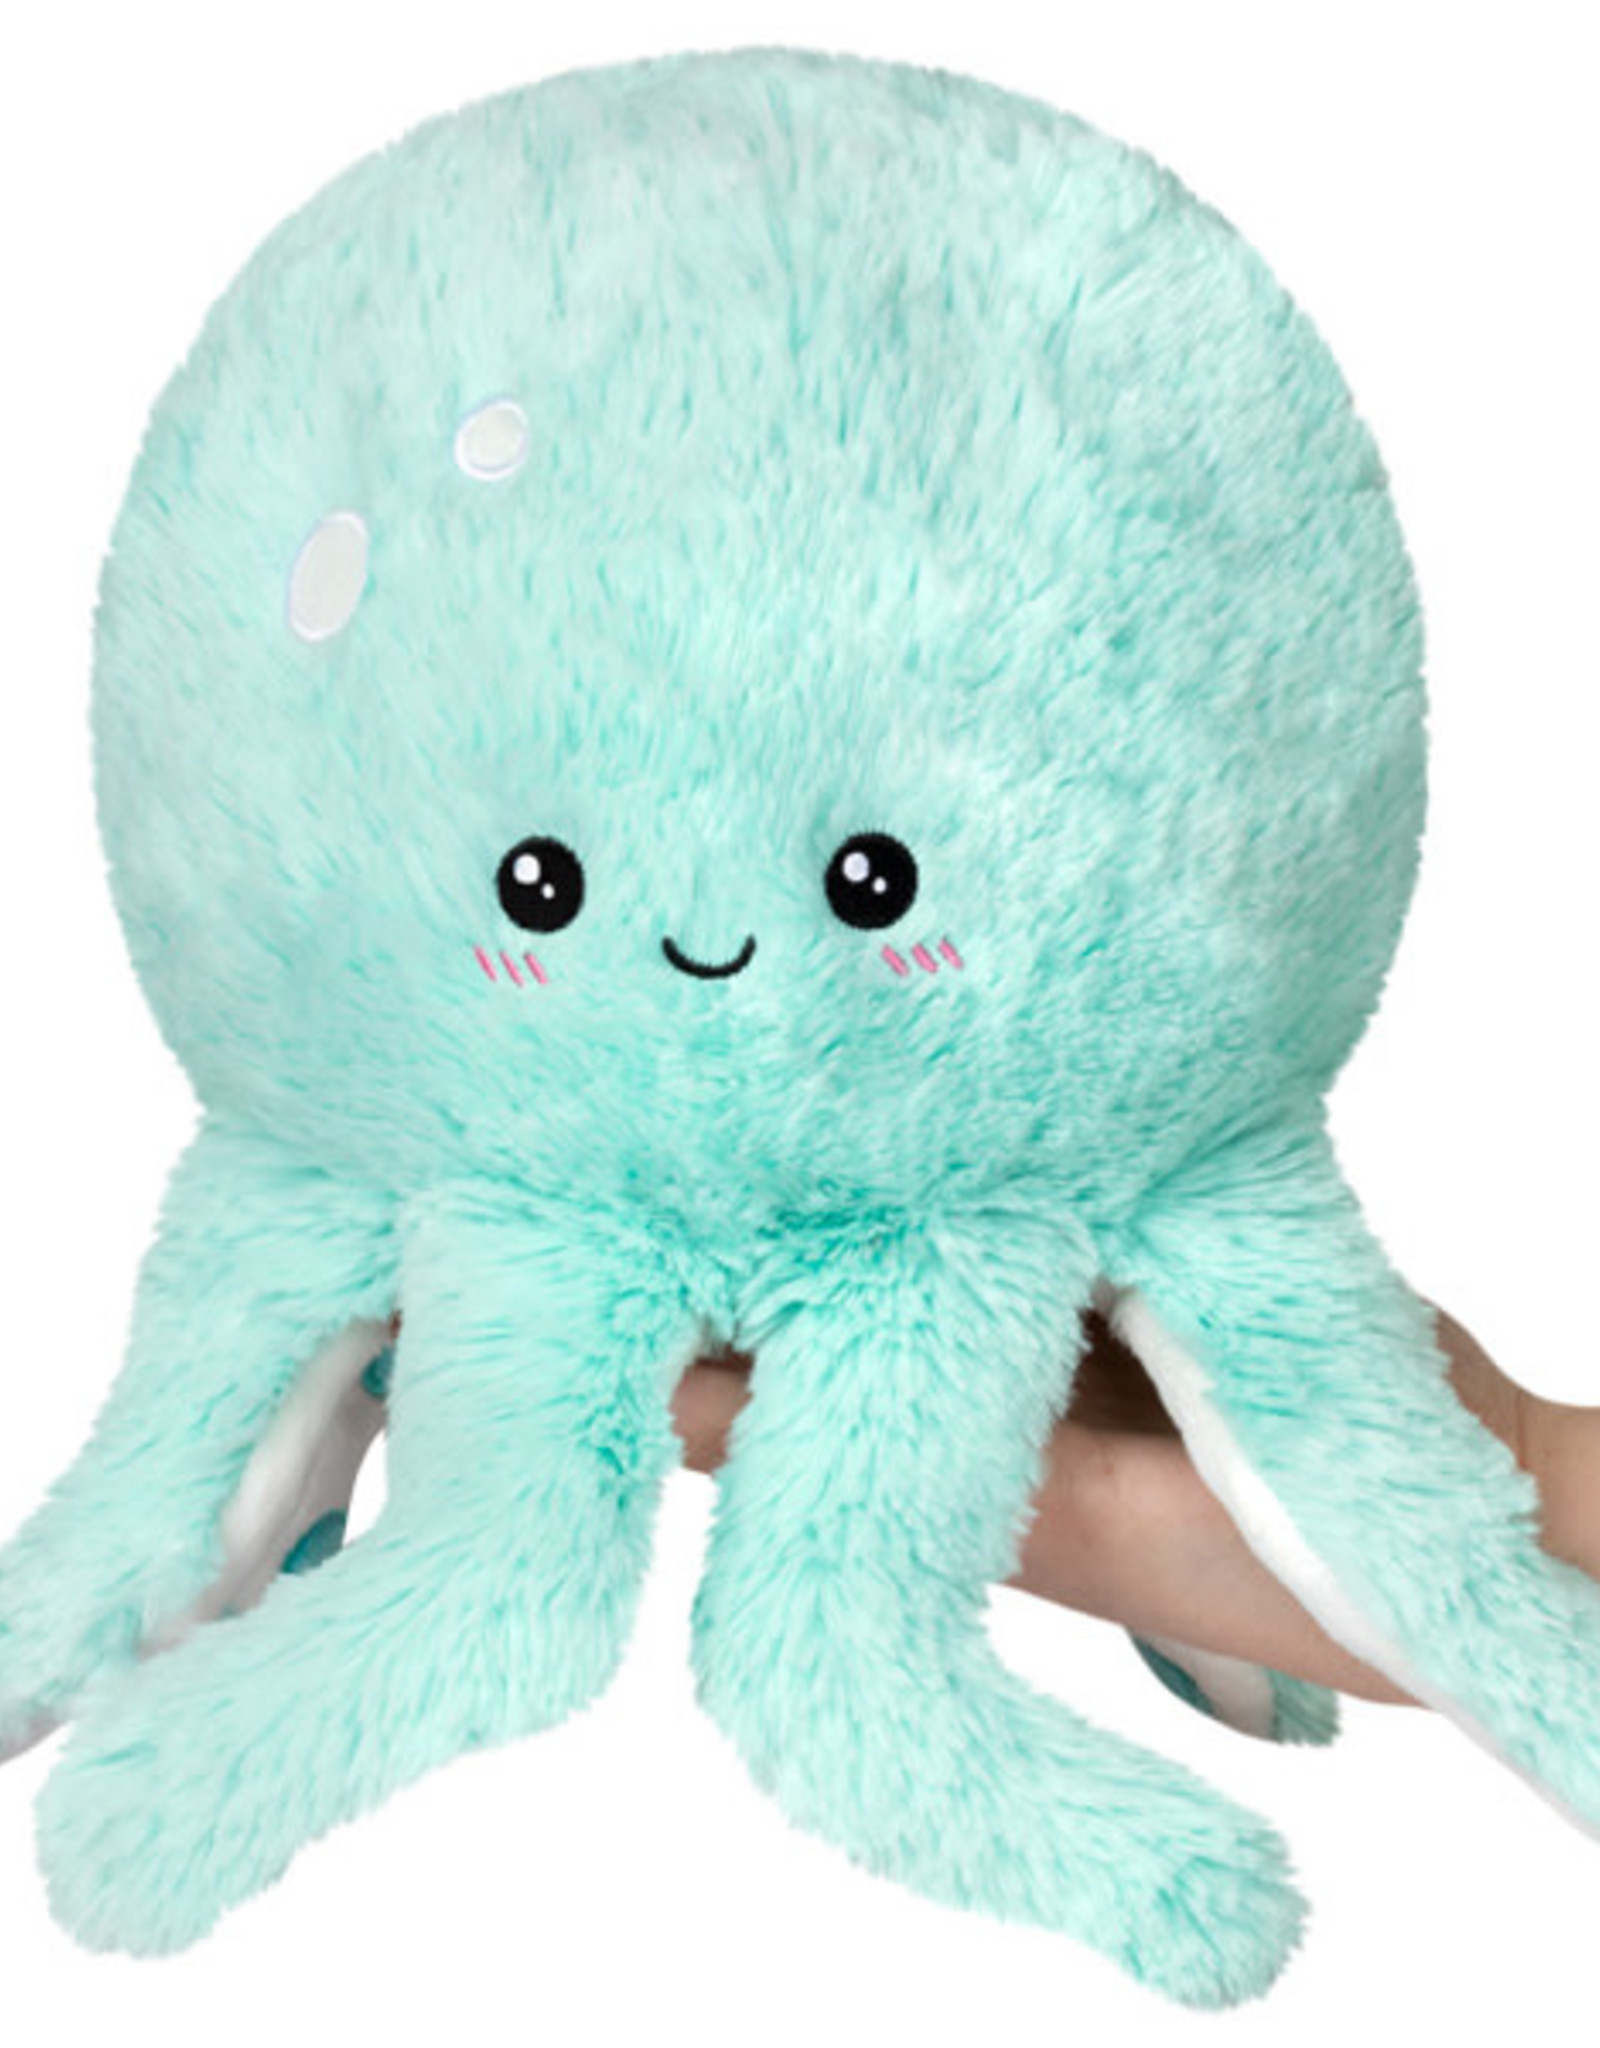 Squishables Snugglemi Snackers Mint Octopus